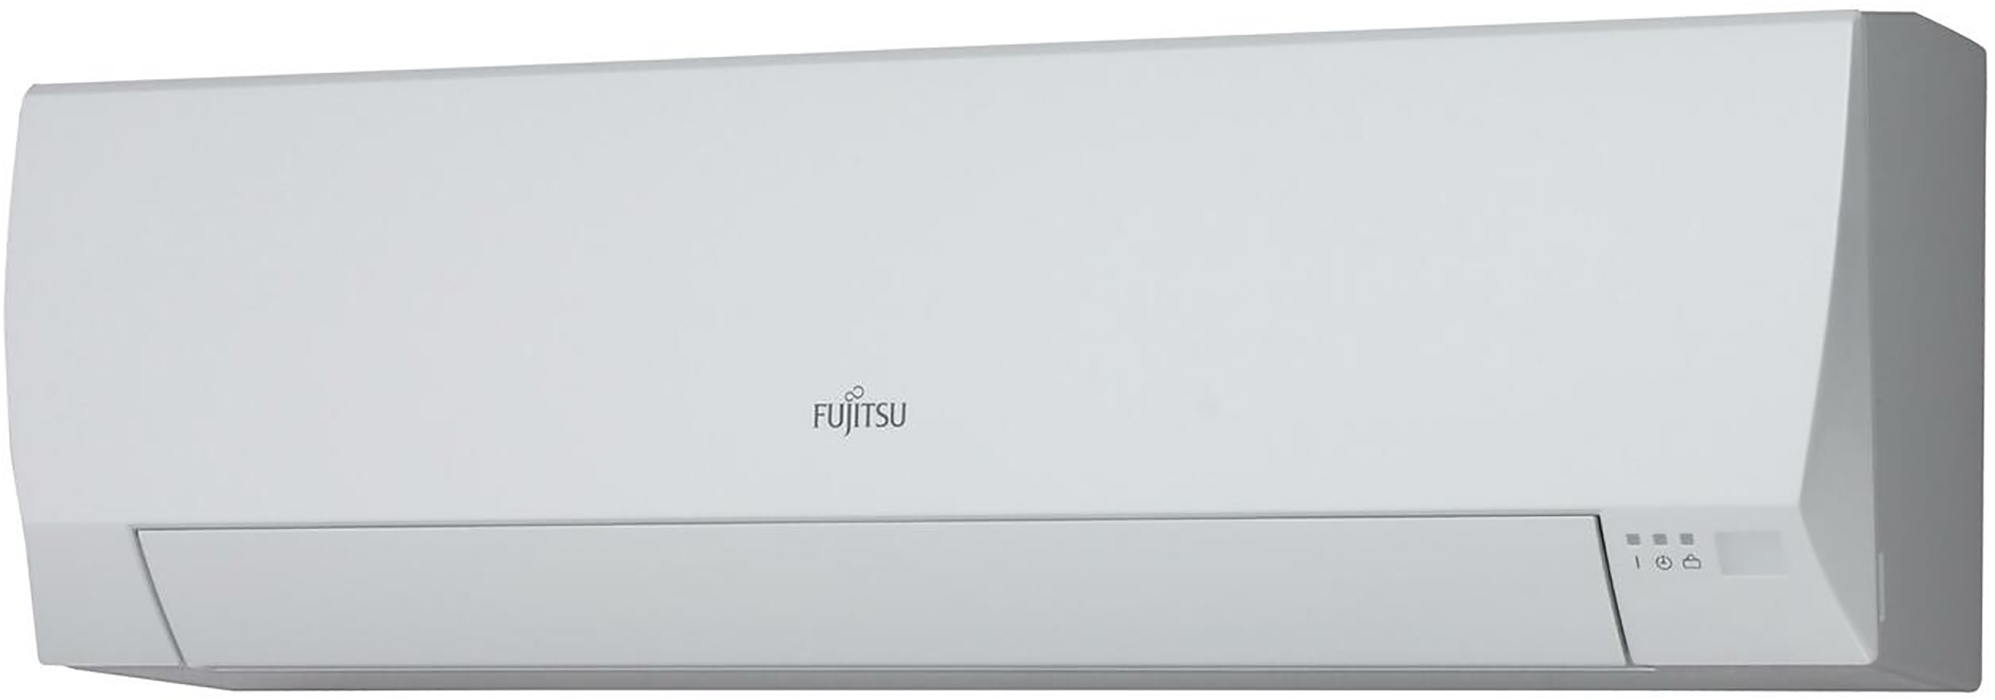 Кондиционер сплит-система Fujitsu ASYG36LMTA/AOYG36LMTA цена 0.00 грн - фотография 2